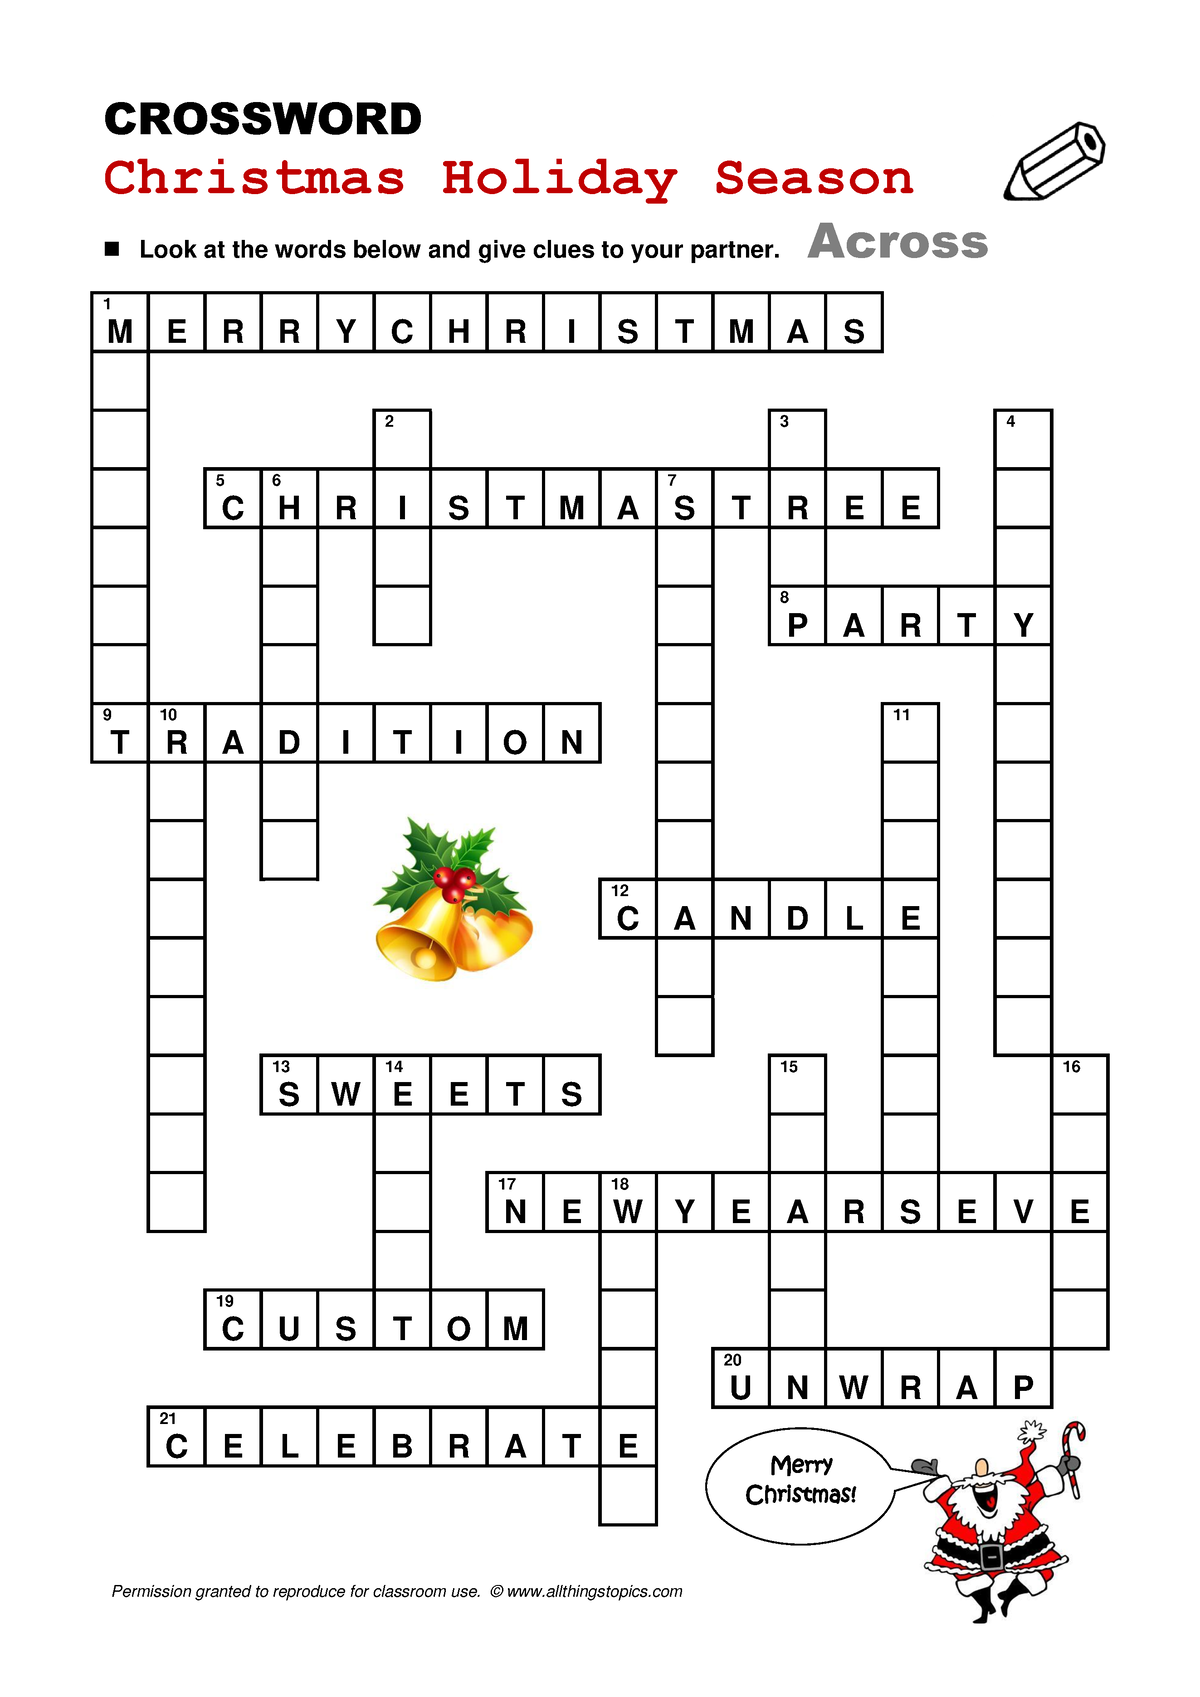 Crossword christmas 2 CROSSWORD Christmas Holiday Season Look at the